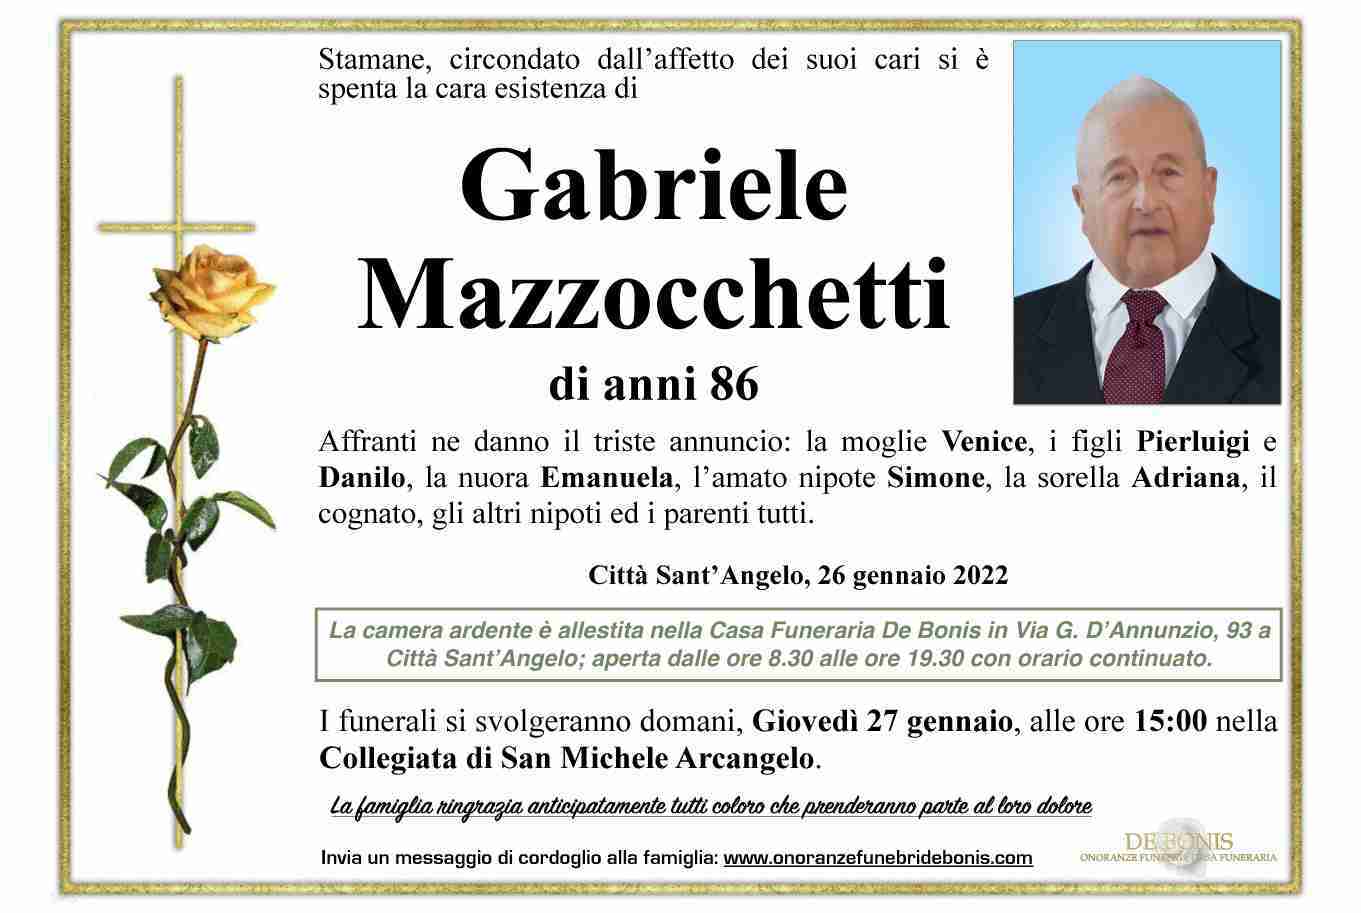 Gabriele Mazzocchetti